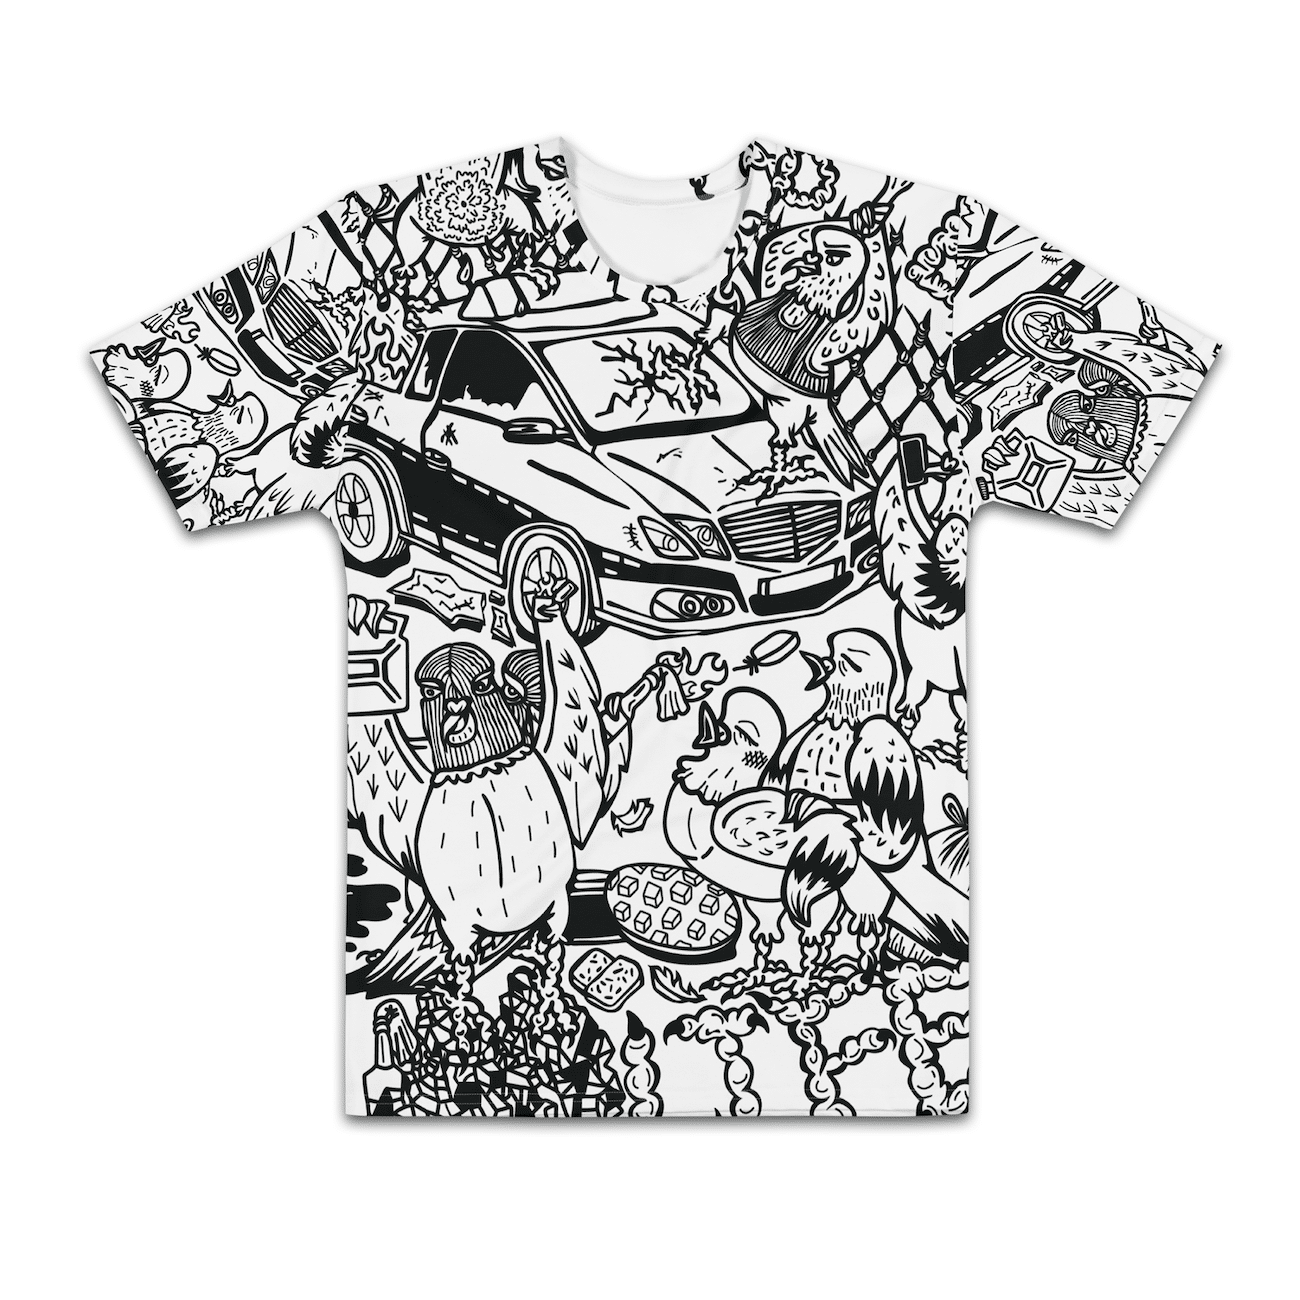 T-Shirt-Design der Brand Taubenlife mit All-over-Illustration